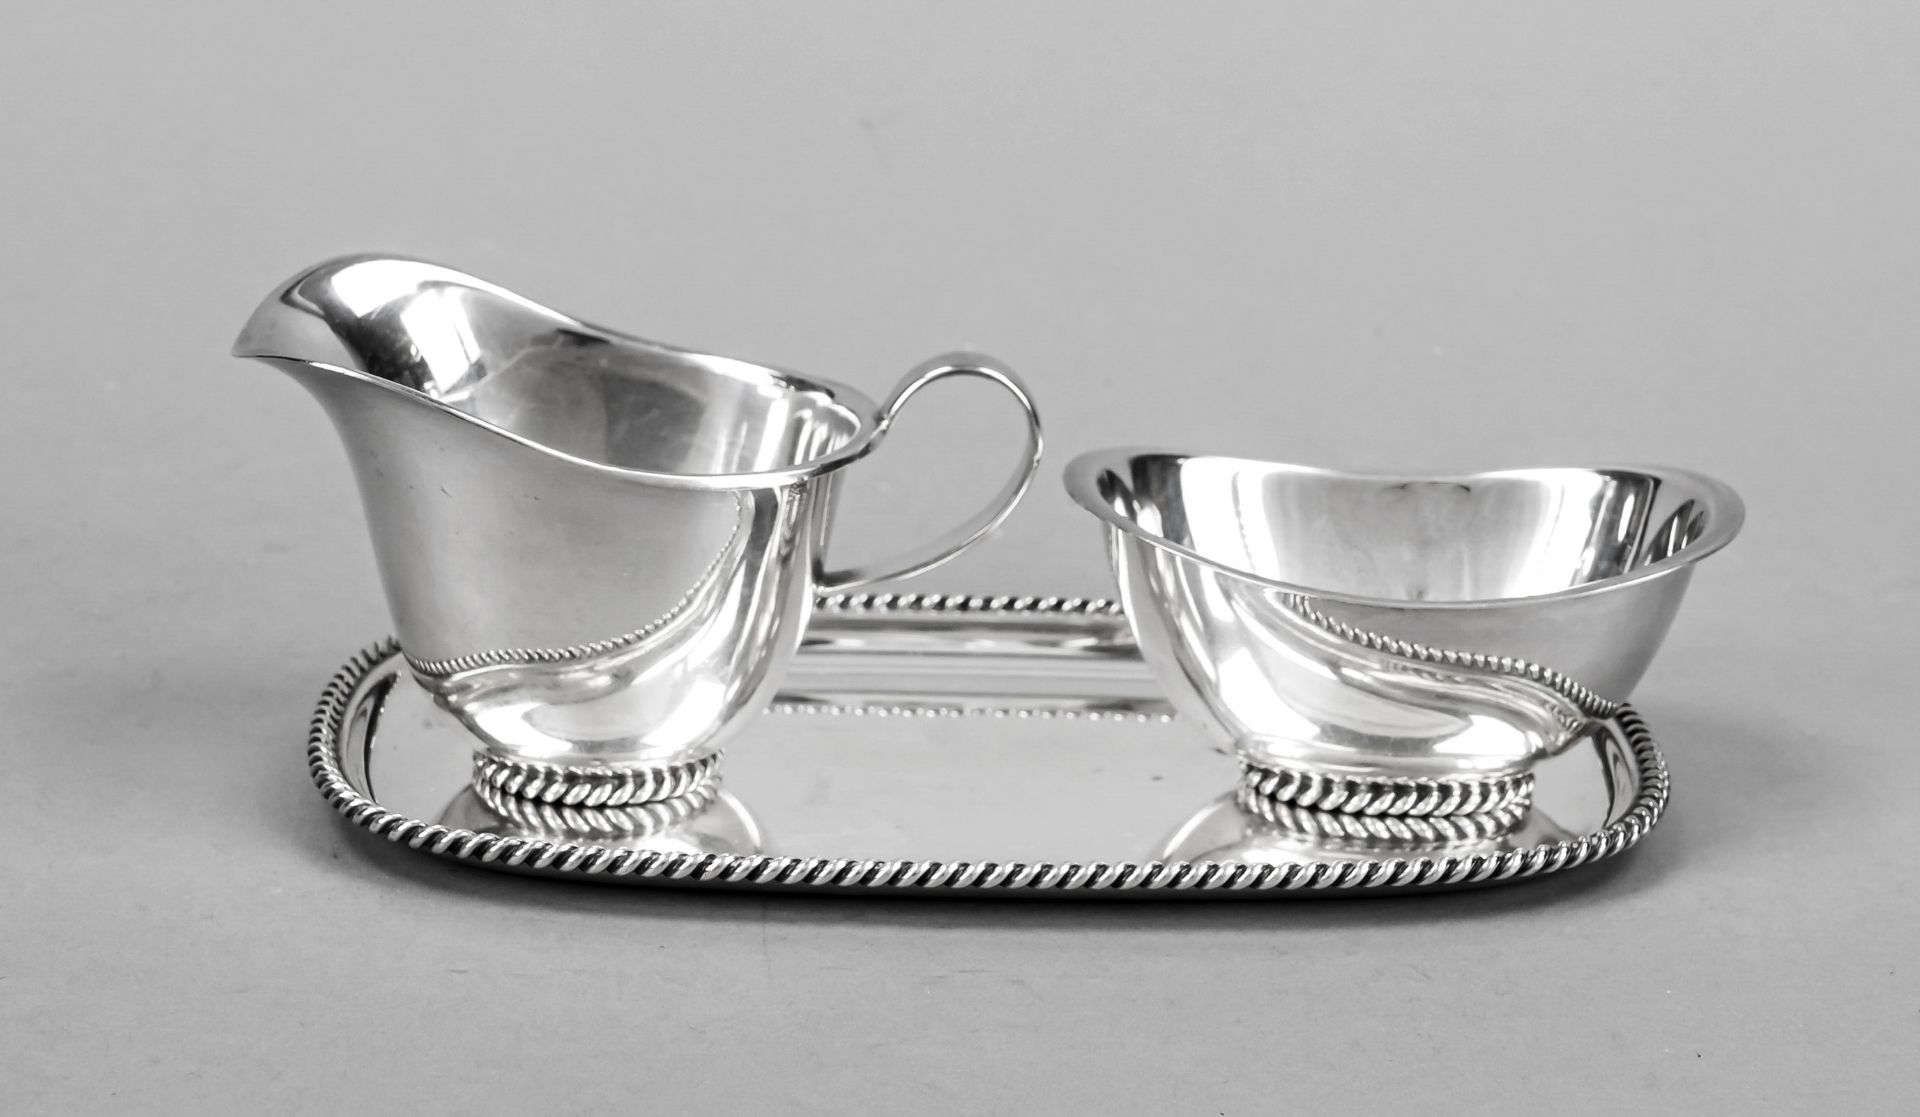 Cream and sugar jug on tray, German, 20th century, maker's mark M. H. Wilkens & Söhne, Bremen-